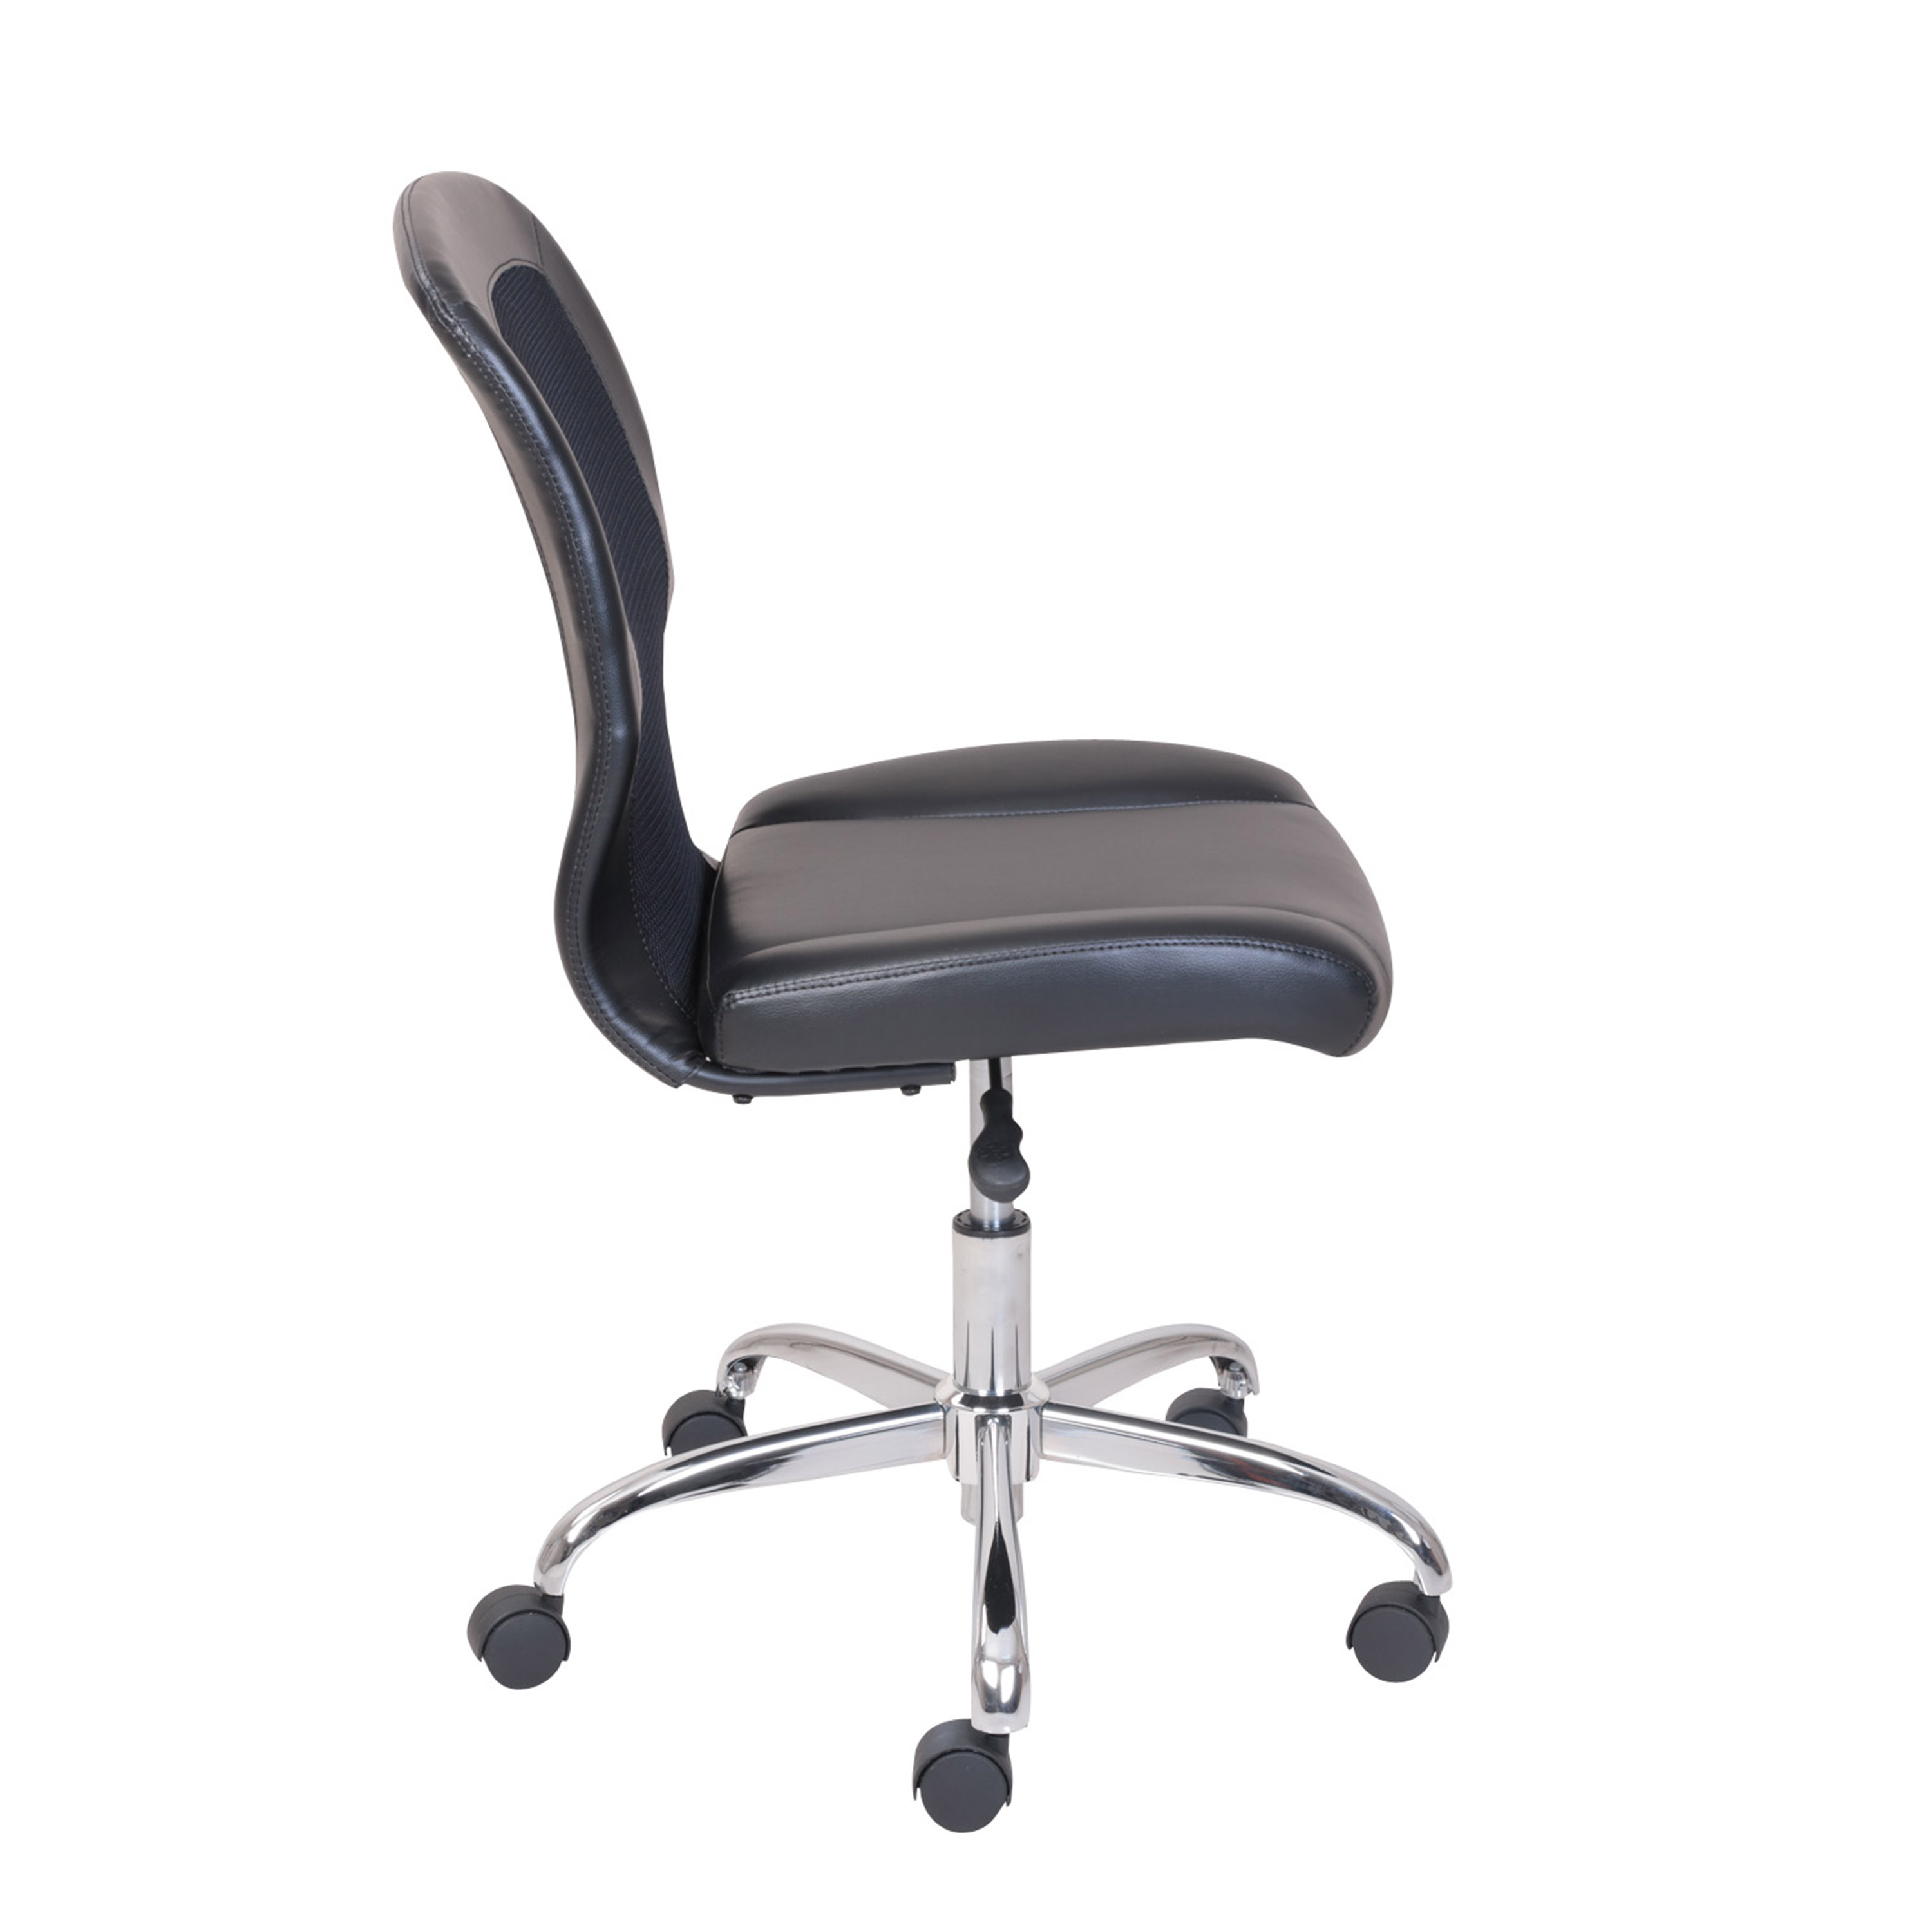 Mainstays Mid-Back, Vinyl Mesh Task Office Chair, Black - image 7 of 9